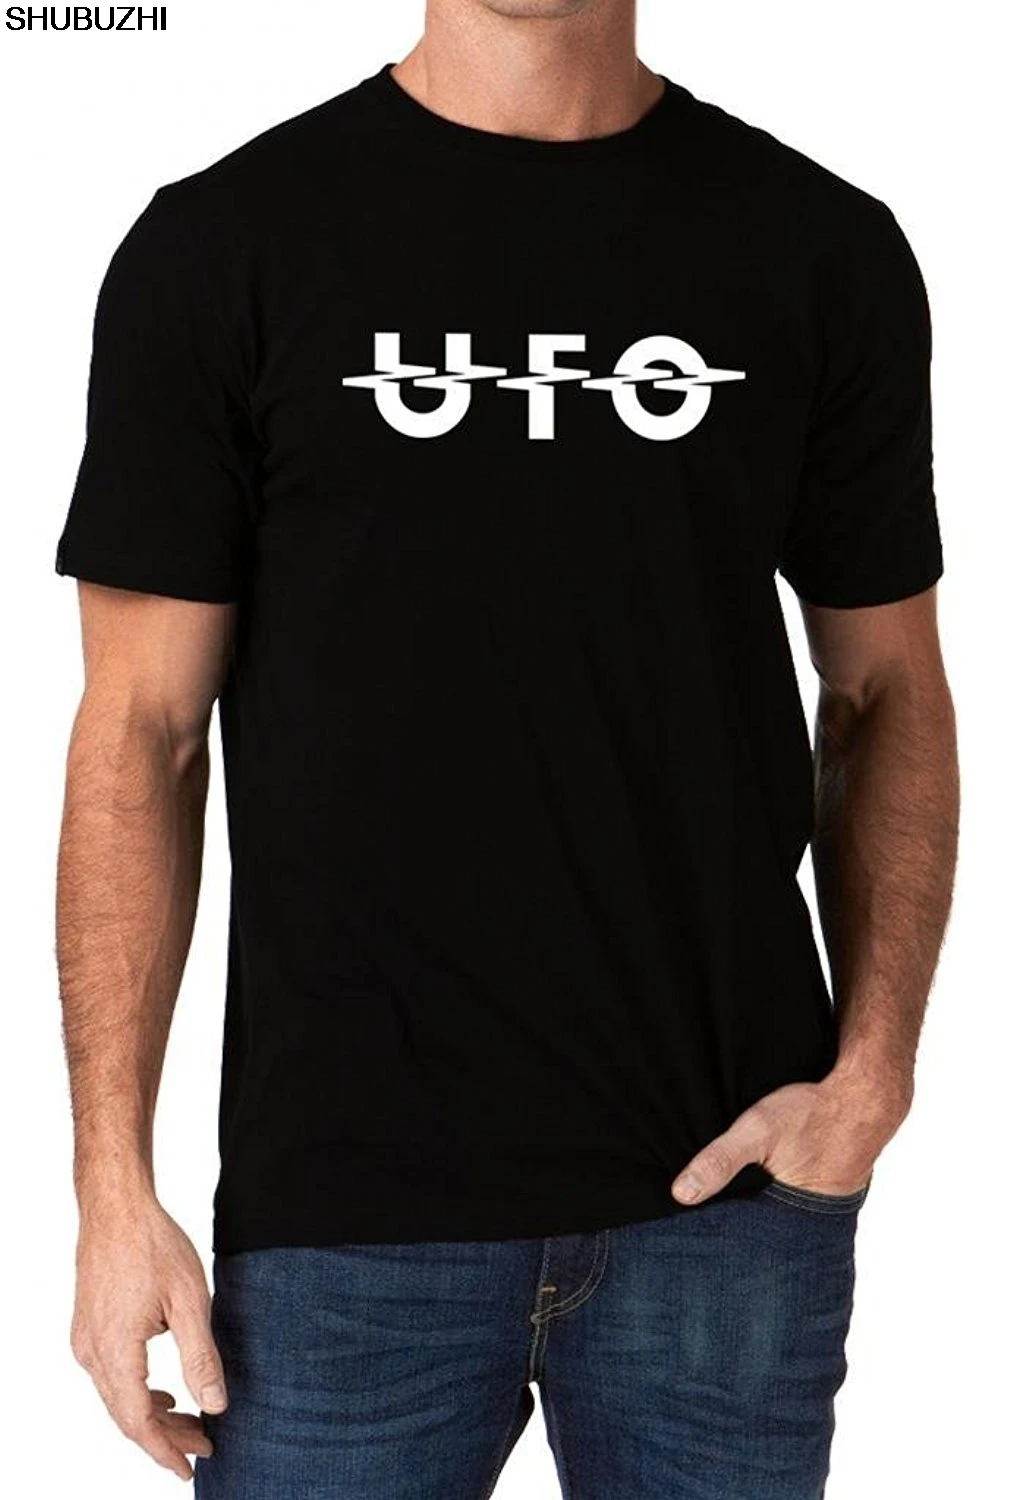 

UFO Band Rock Music Metal Logo T-Shirt T Shirt Hipster Cool O Neck Tops Loose Black Men T Shirts Homme Tees Base Shirtsbz190